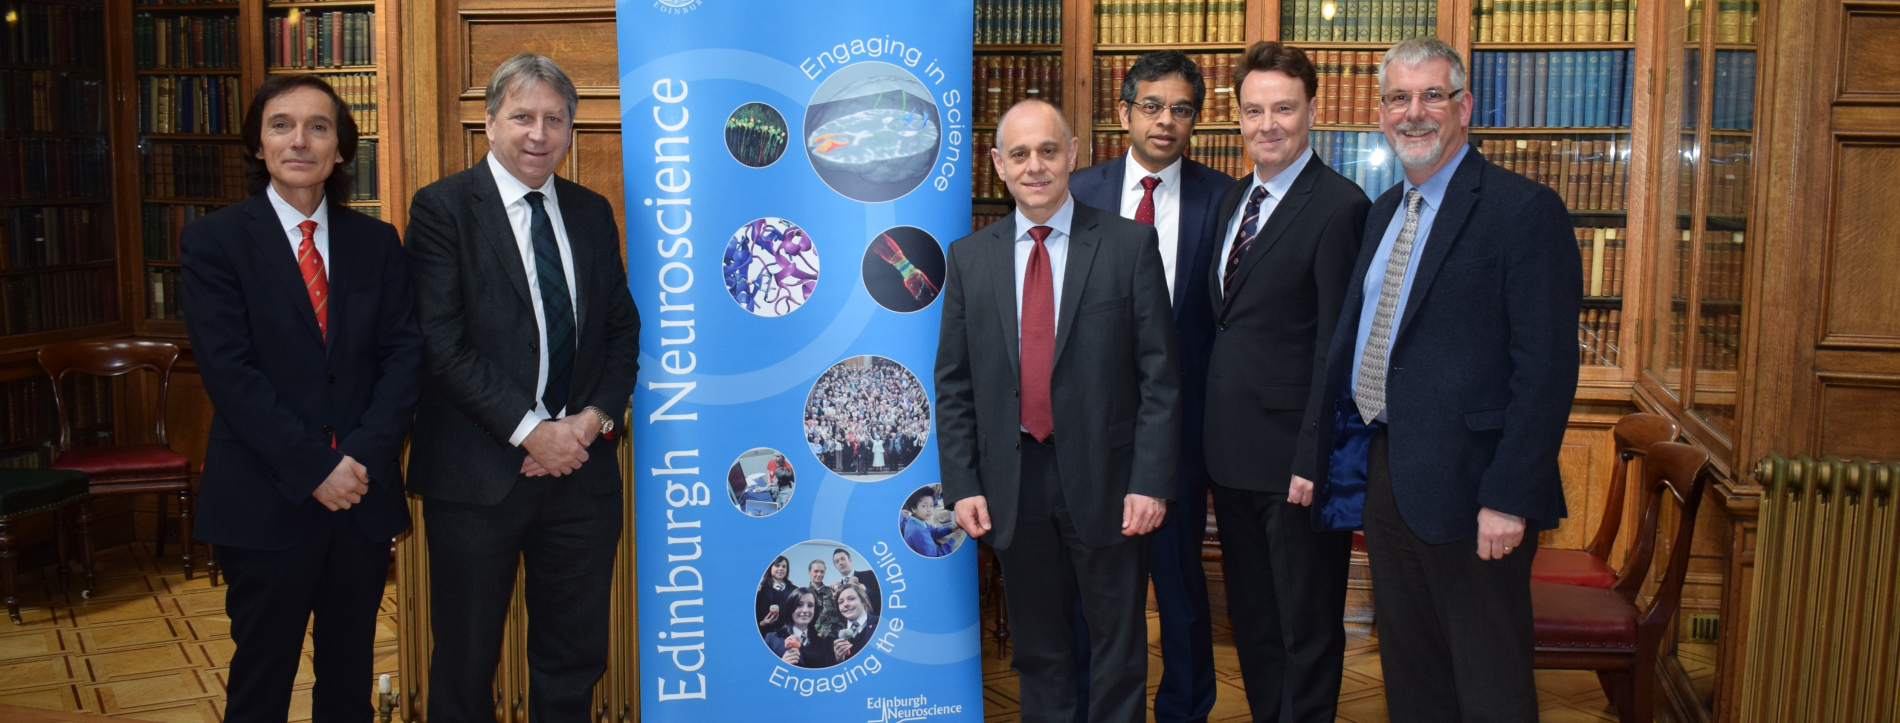 McGill, University of Edinburgh partnership announced.